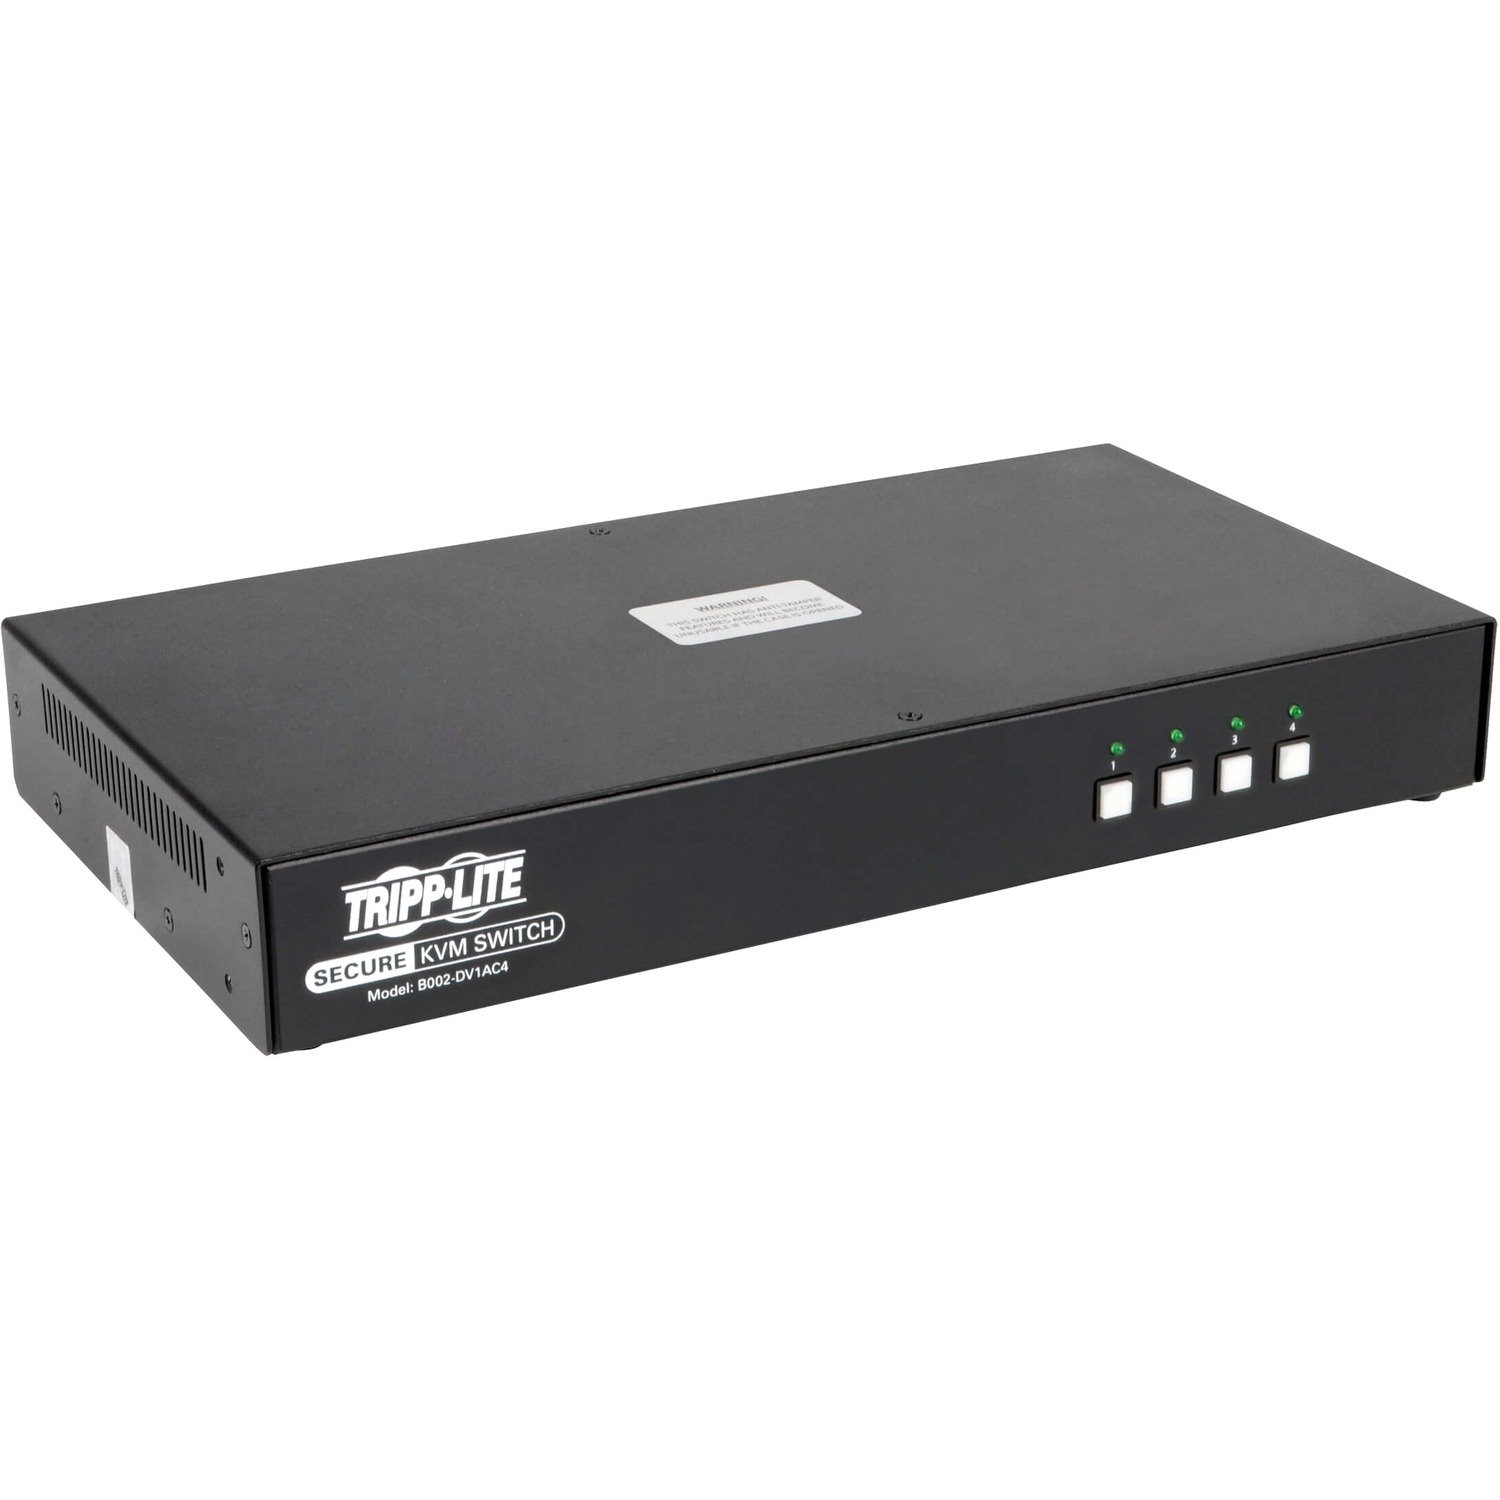 Tripp Lite Secure KVM Switch 4-Port DVI + Audio NIAP PP3.0 Certified w/ CAC